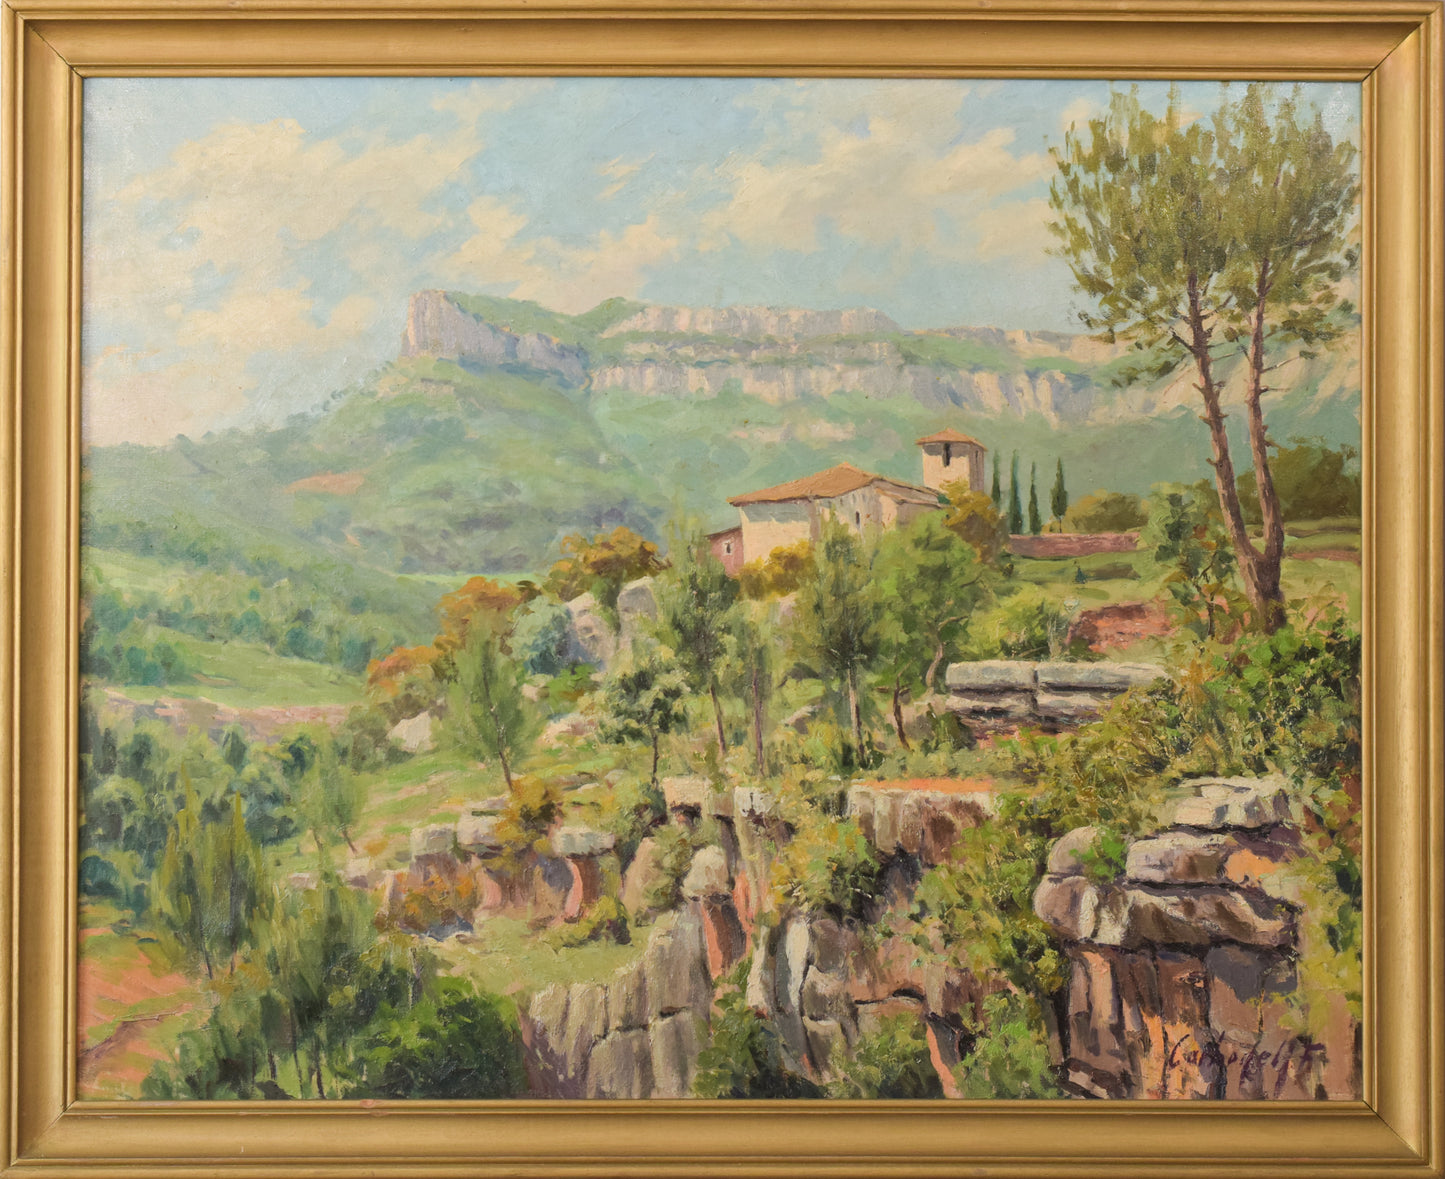 Mountain Landscape - Oil on Canvas